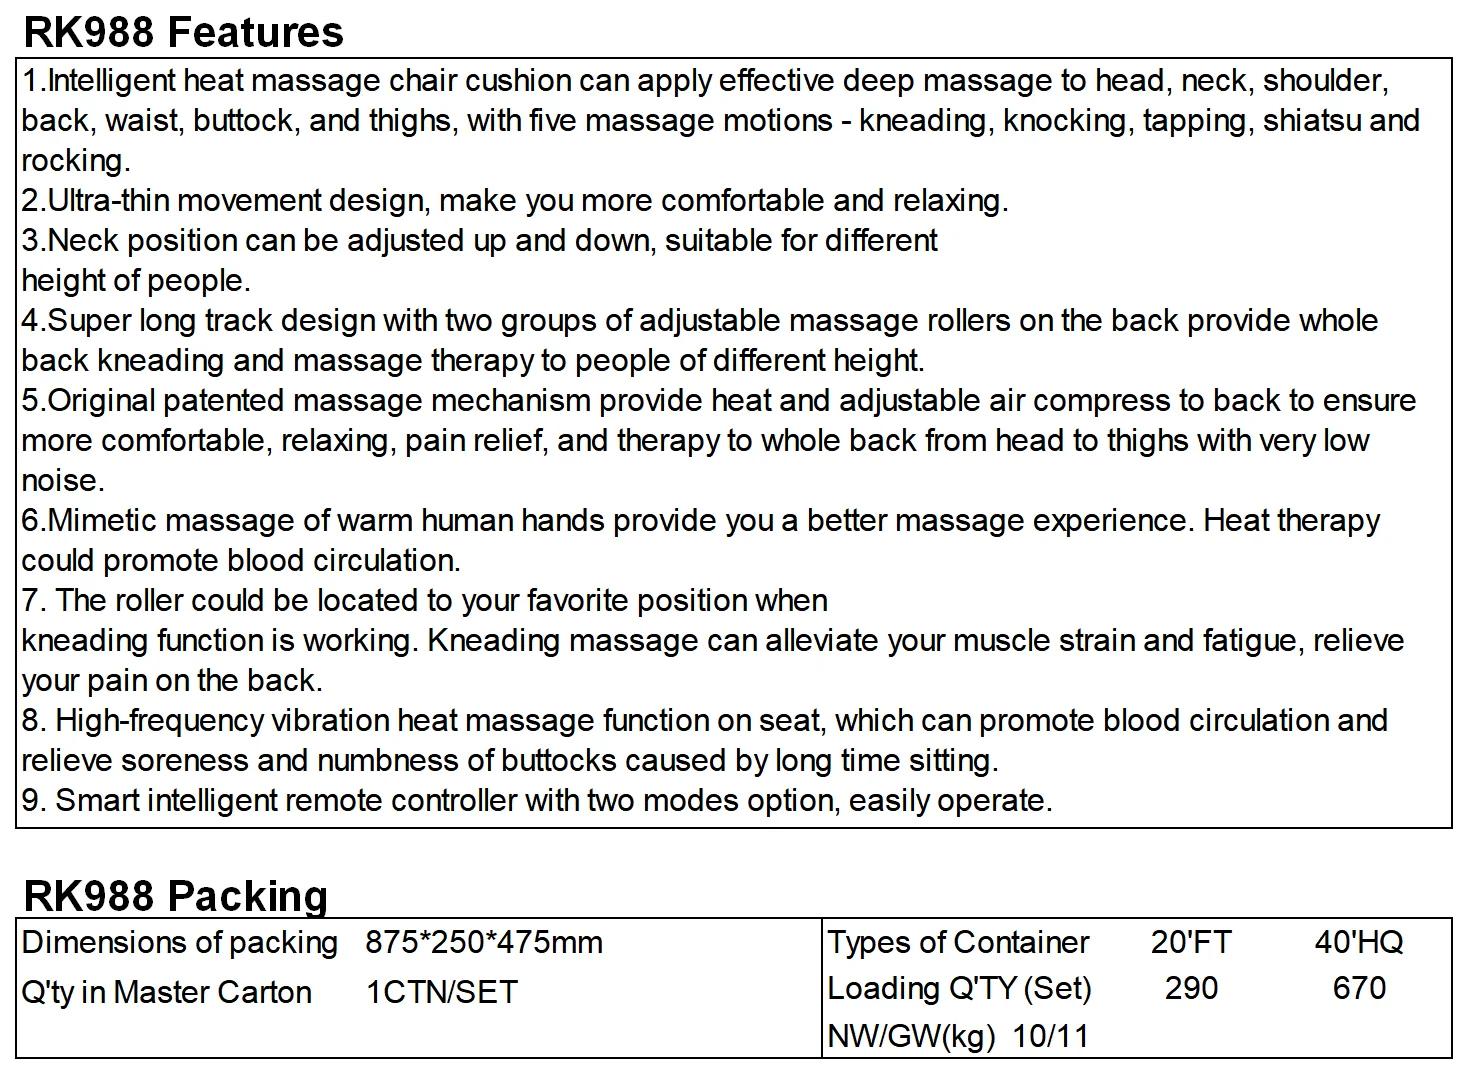 COMTEK Portable Massage Cushion Factory Supply Superior Quality Neck Shiatsu Back Stretch Heat Function RK988